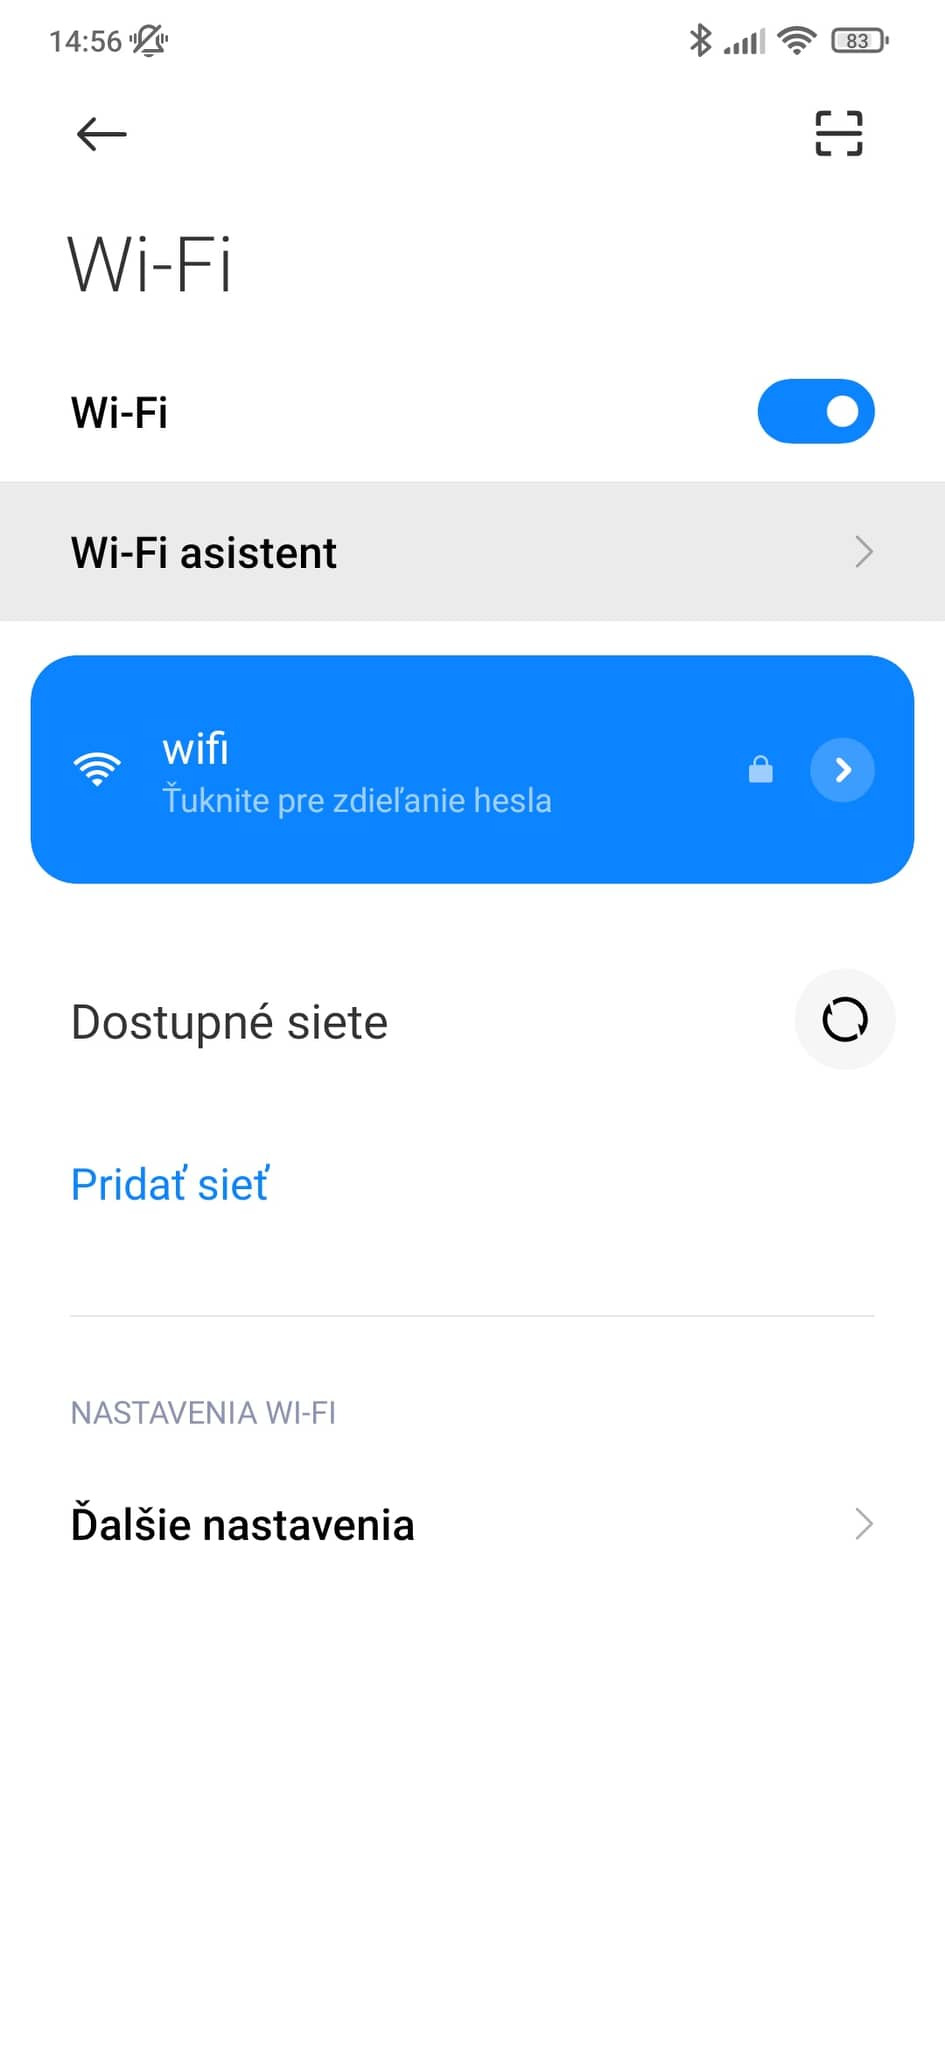 Asistent - Wi-Fi